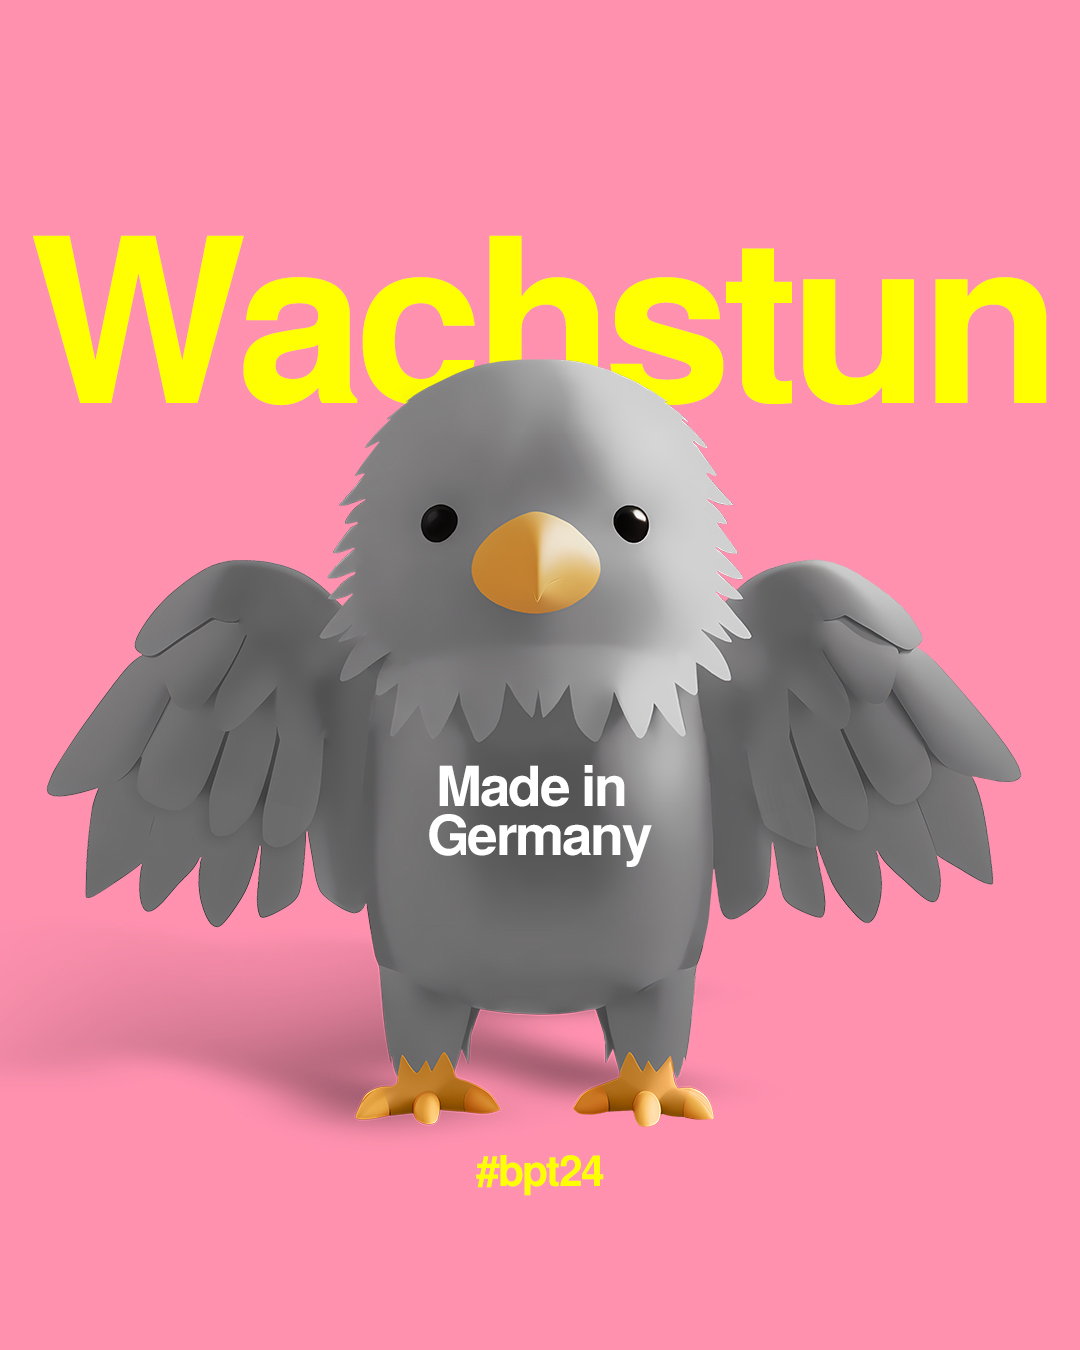 Wachstun<br>Made in Germany<br>#bpt24